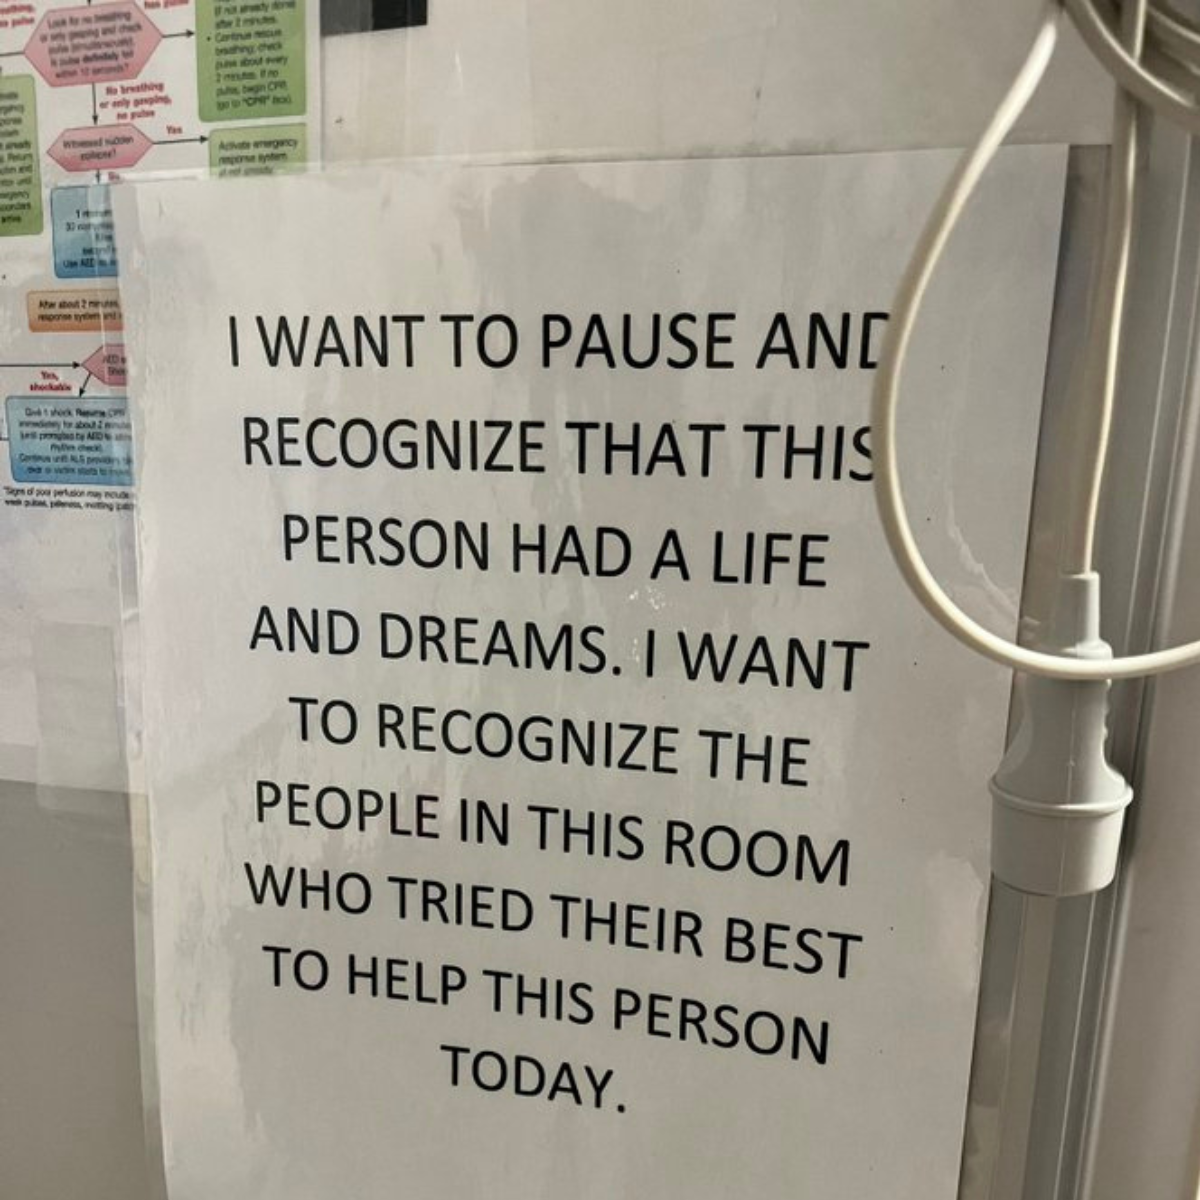 The hospital resuscitation room sign.